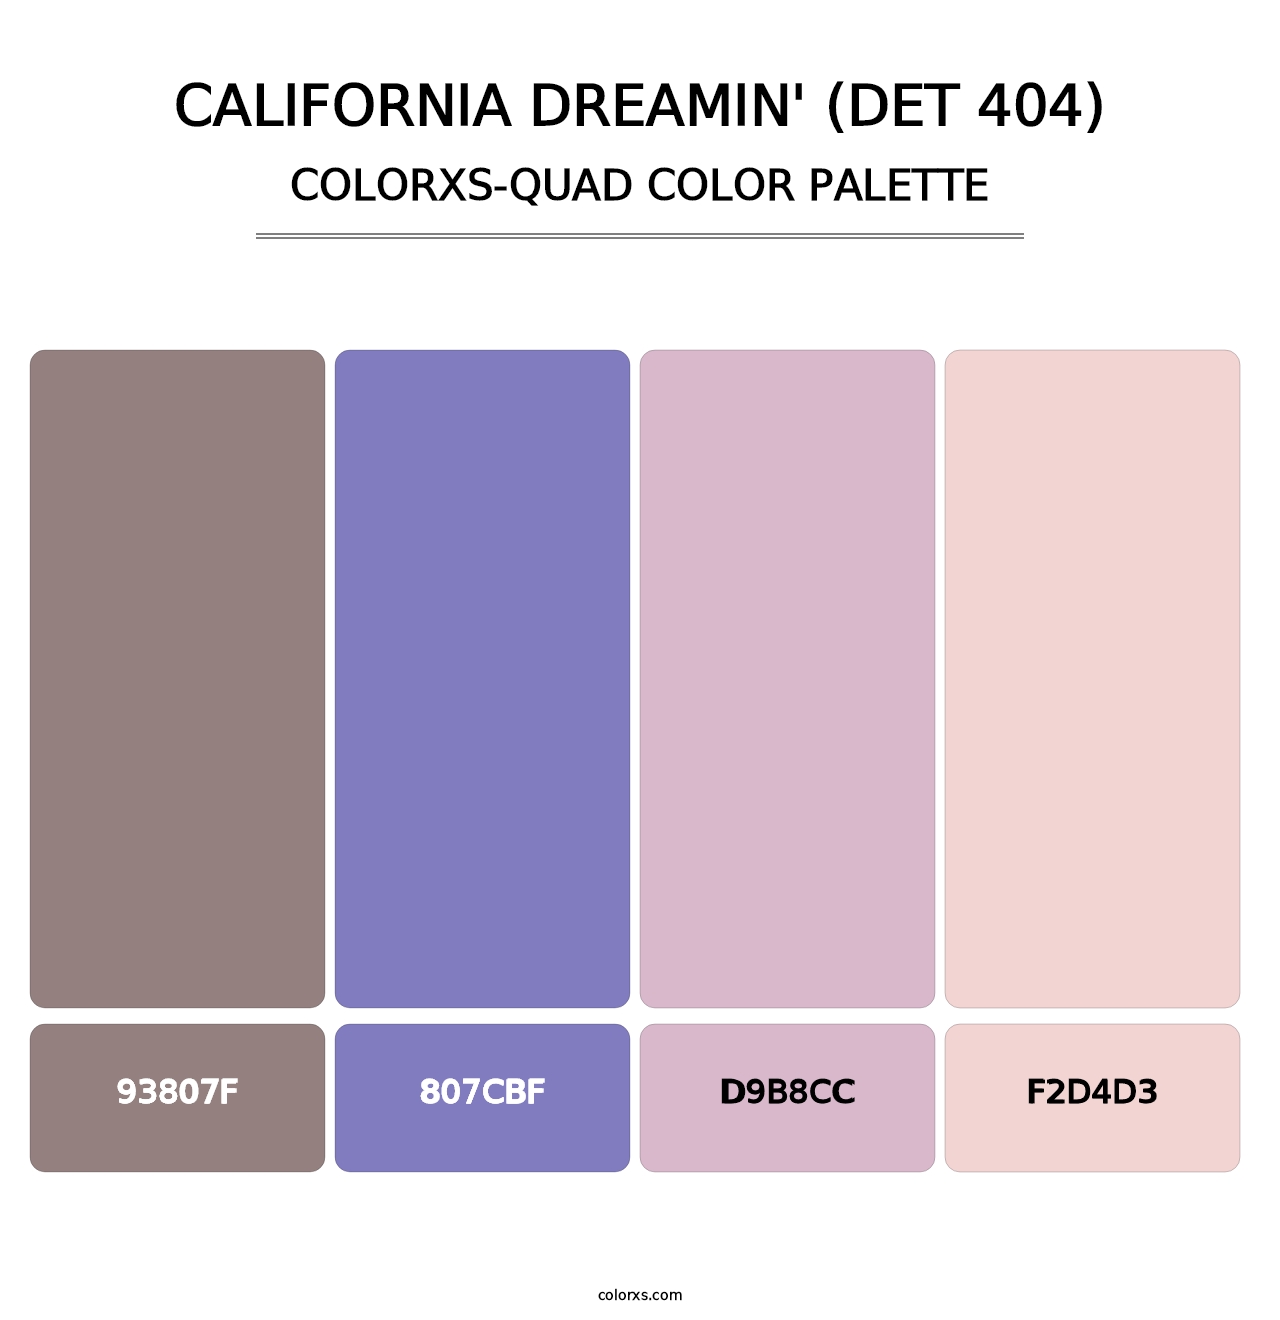 California Dreamin' (DET 404) - Colorxs Quad Palette